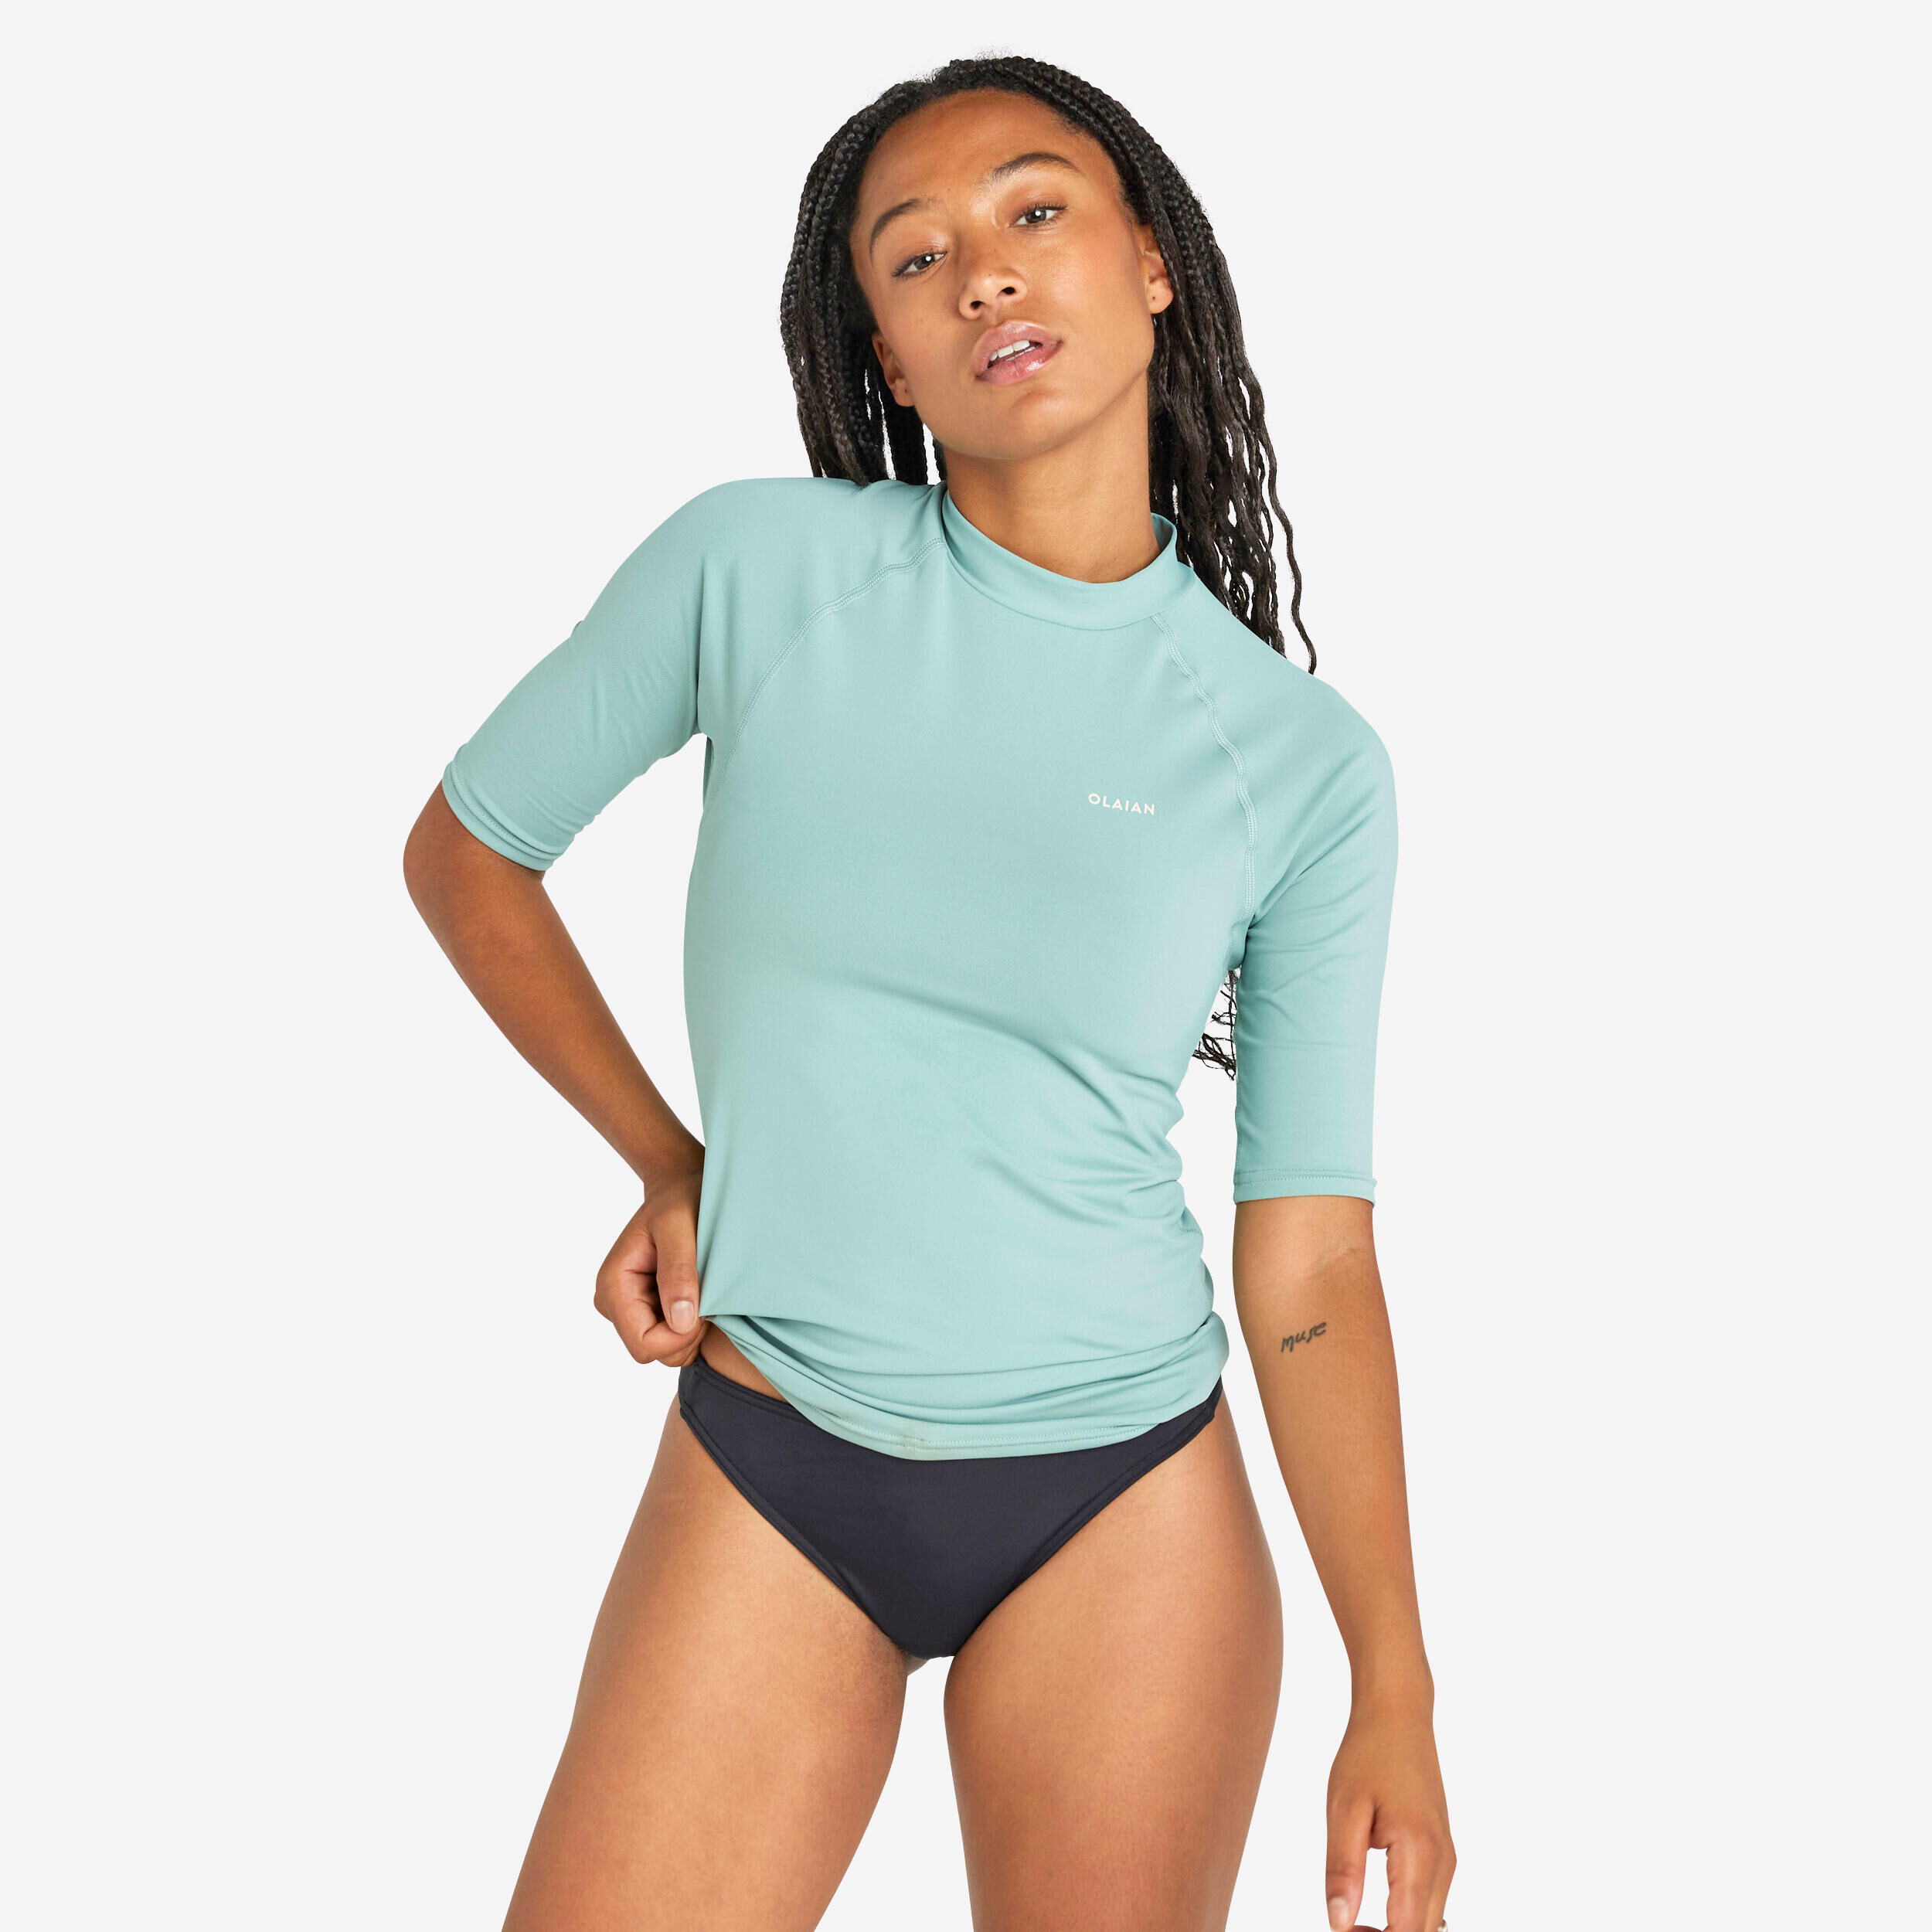 OLAIAN Women's anti-UV short-sleeve surf top T-shirt 100 - light khaki